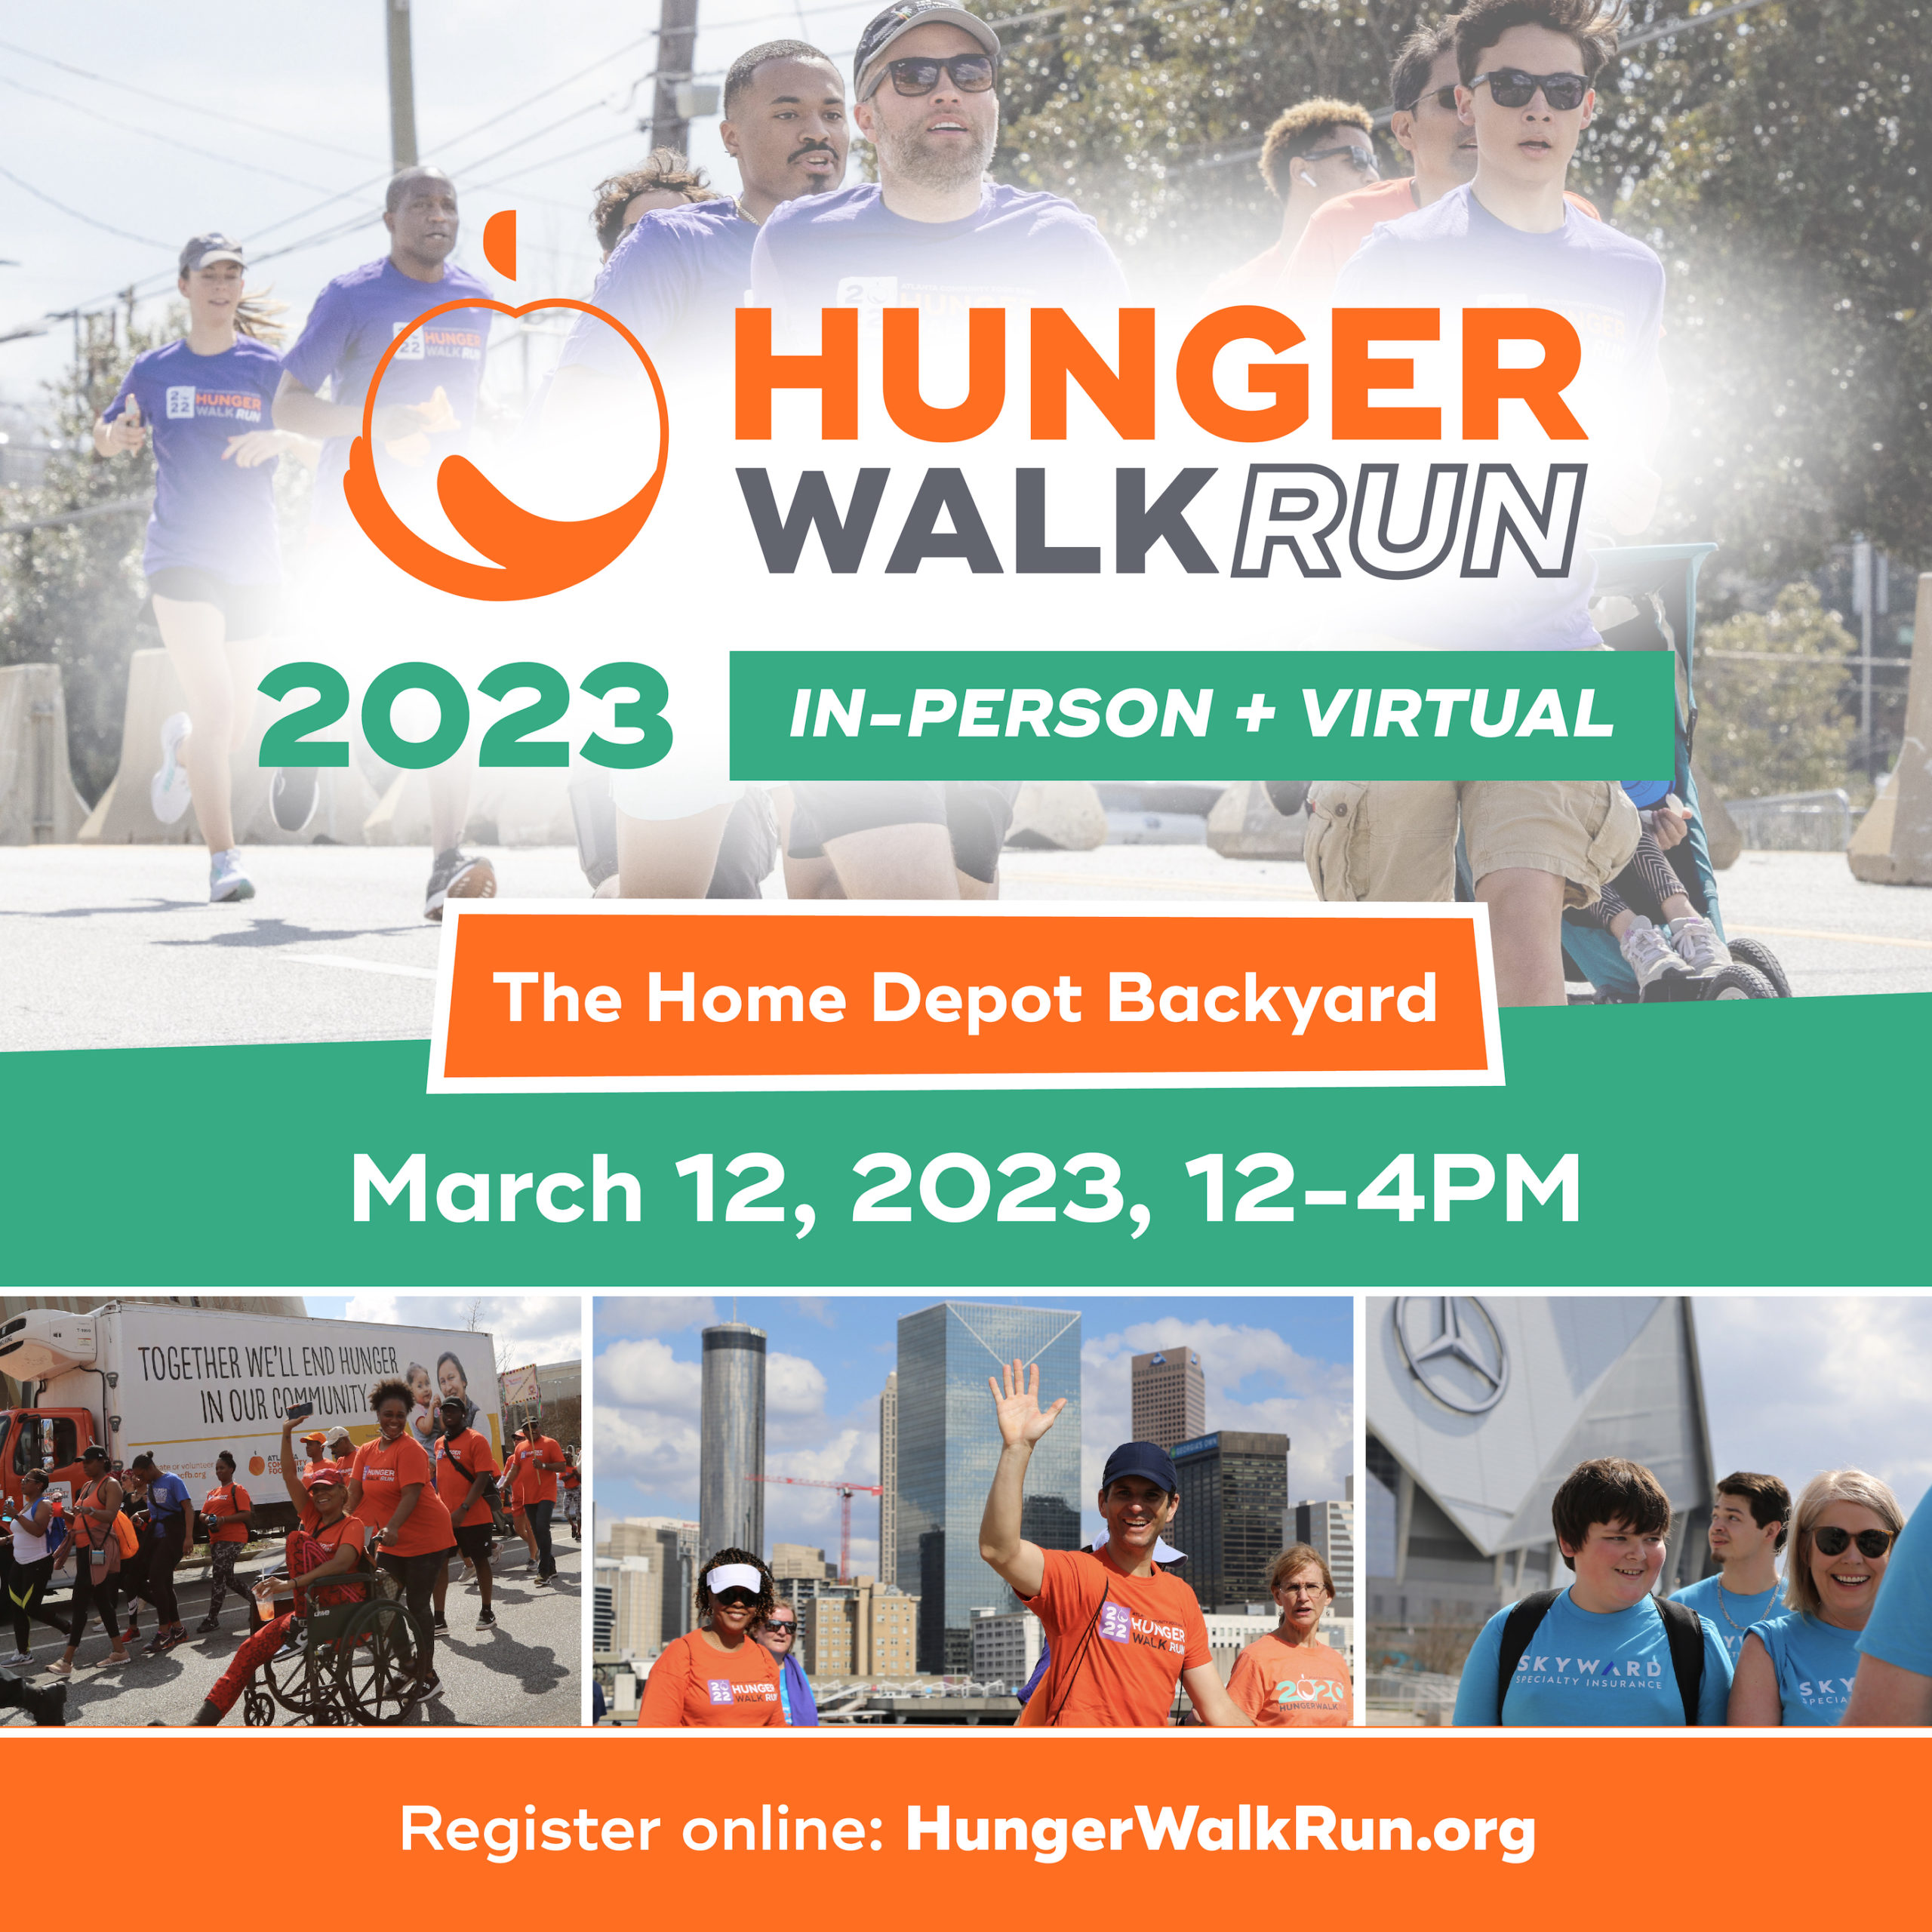 Hunger Walk Run Promotional